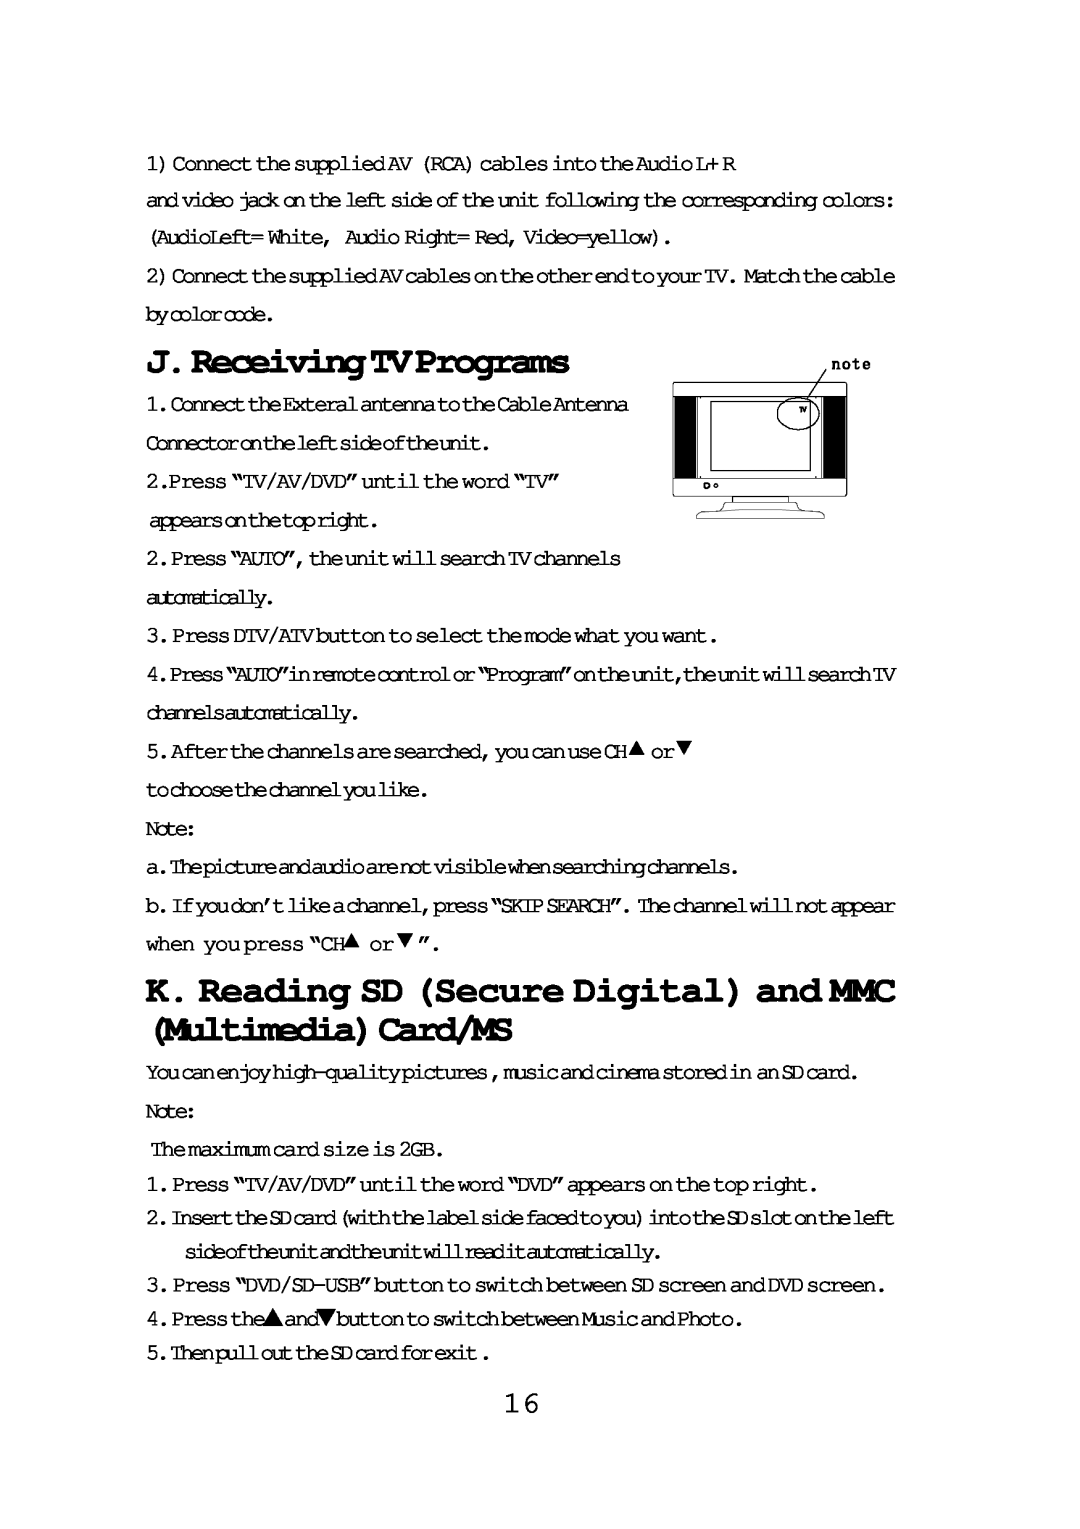 Audiovox FPE1087 operating instructions J.ReceivingTVPrograms, K. Reading SD Secure Digital and MMC MultimediaCard/MS 